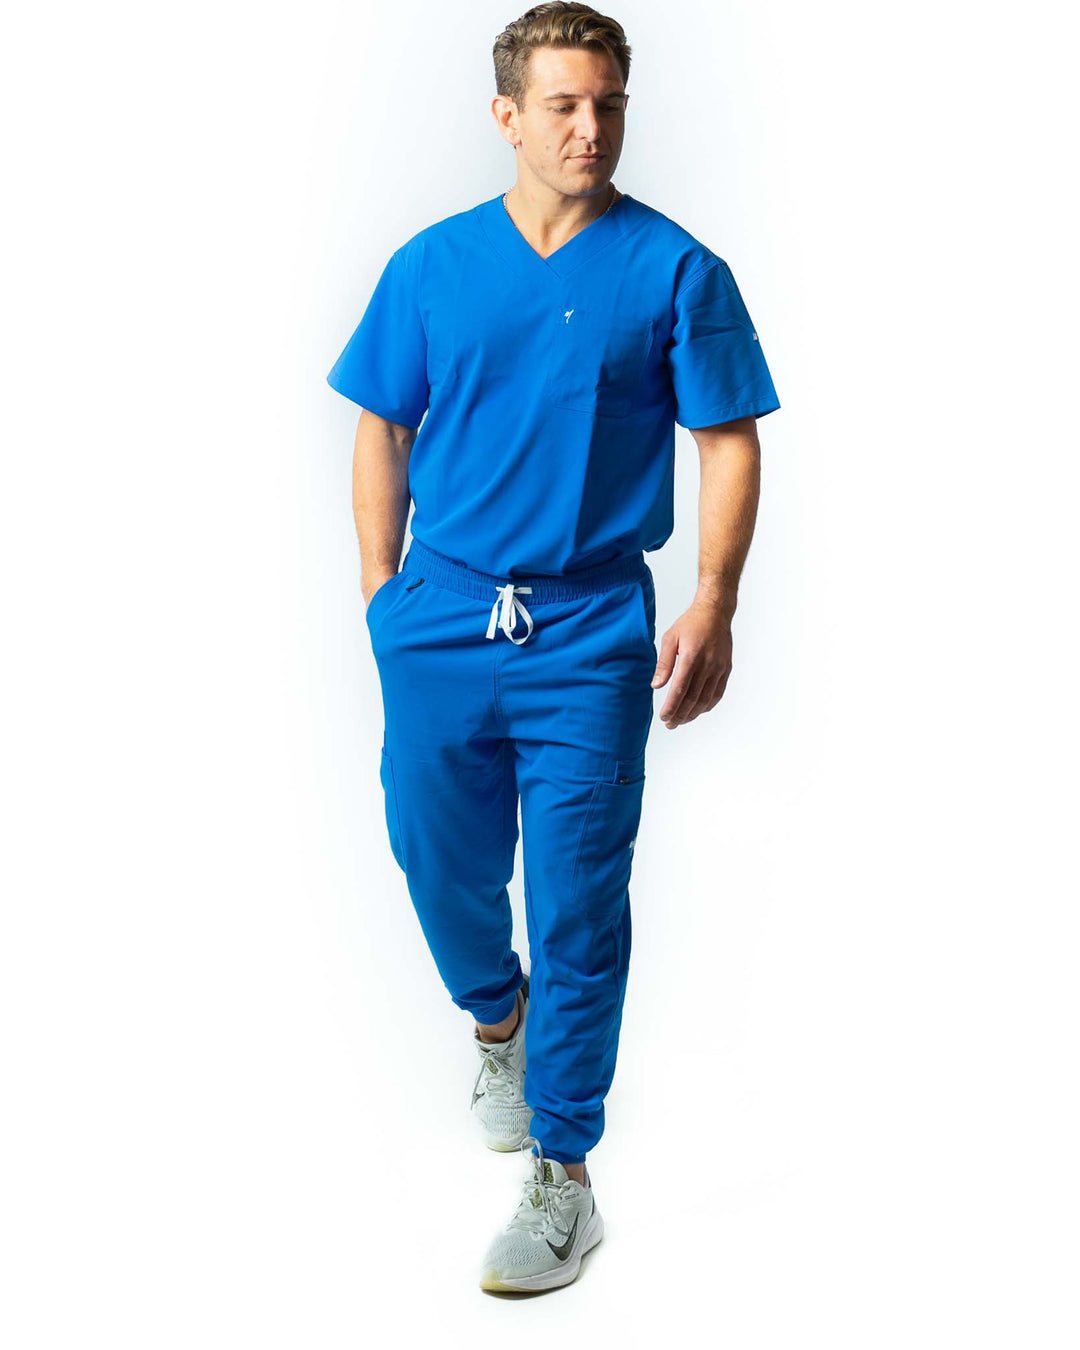 men's Royal Blue Jogger Scrub Pants - Jogger Scrubs by Millennials In Medicine (Mim Scrubs)